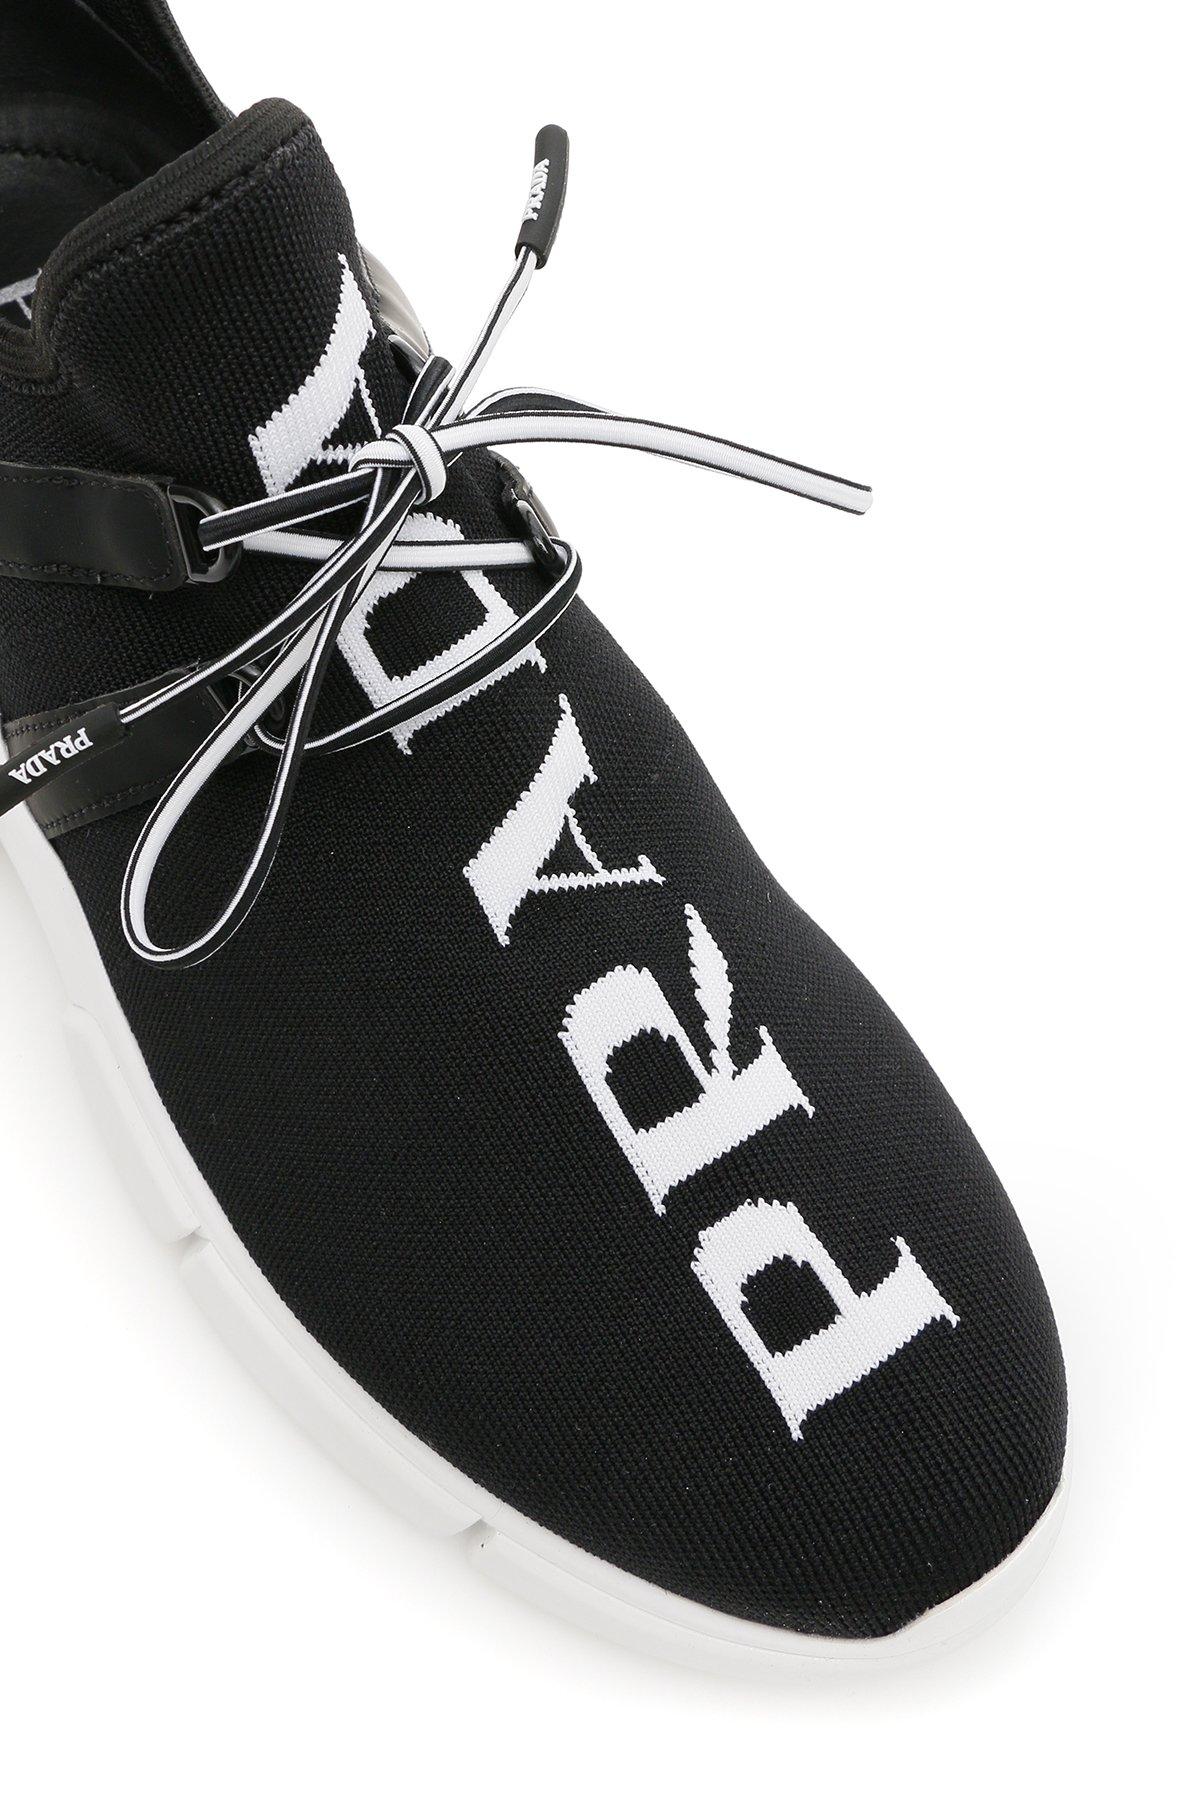 Prada Logo Knit Sneakers in Black - Save 61% - Lyst